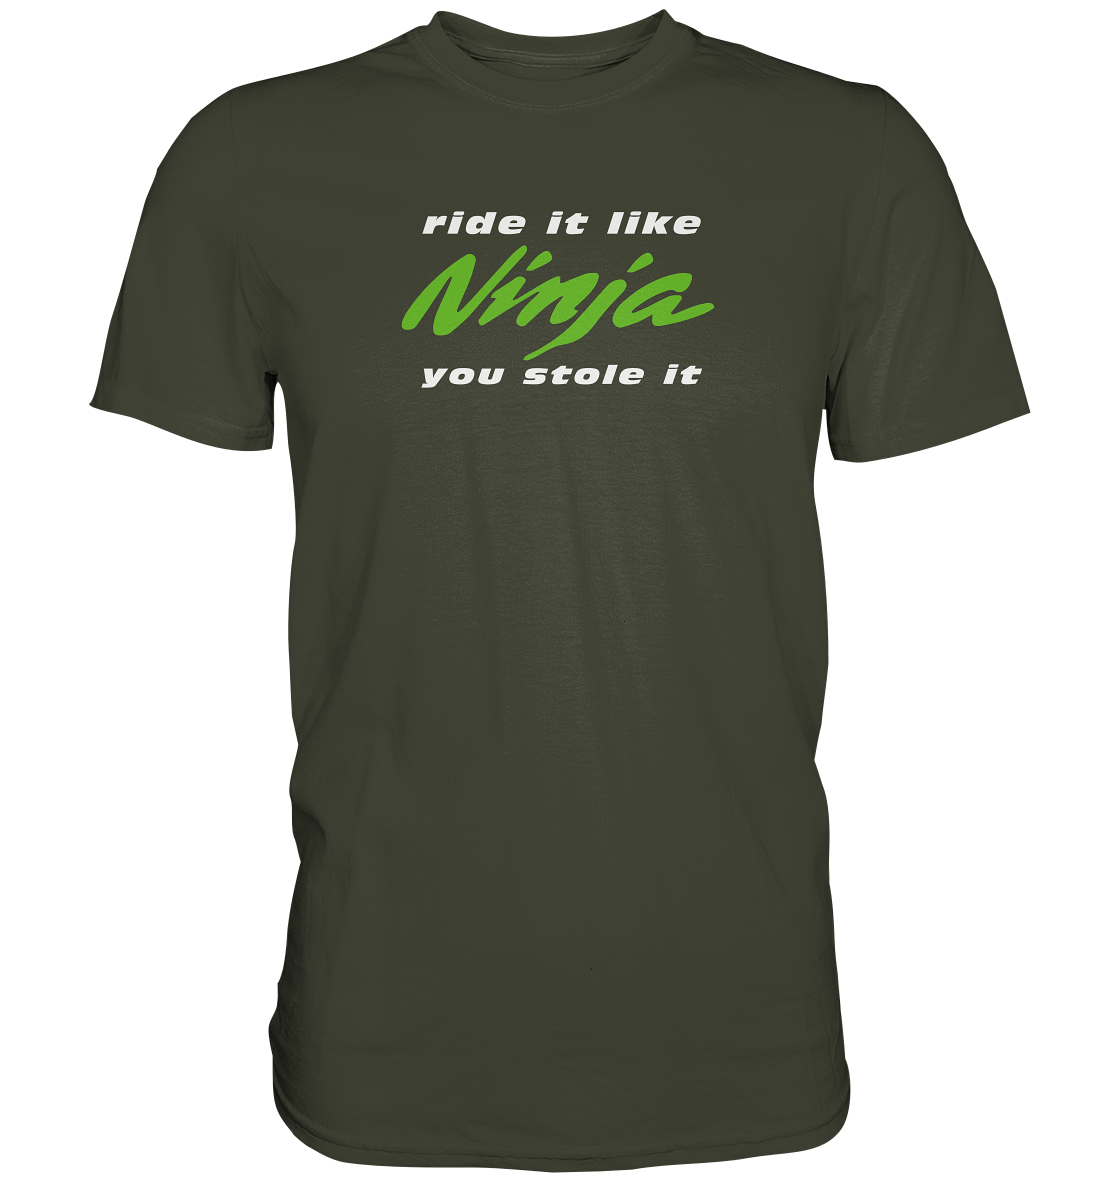 Ninja - ride it like you stole it - dunkle Shirtfarben - Premium unisex Shirt